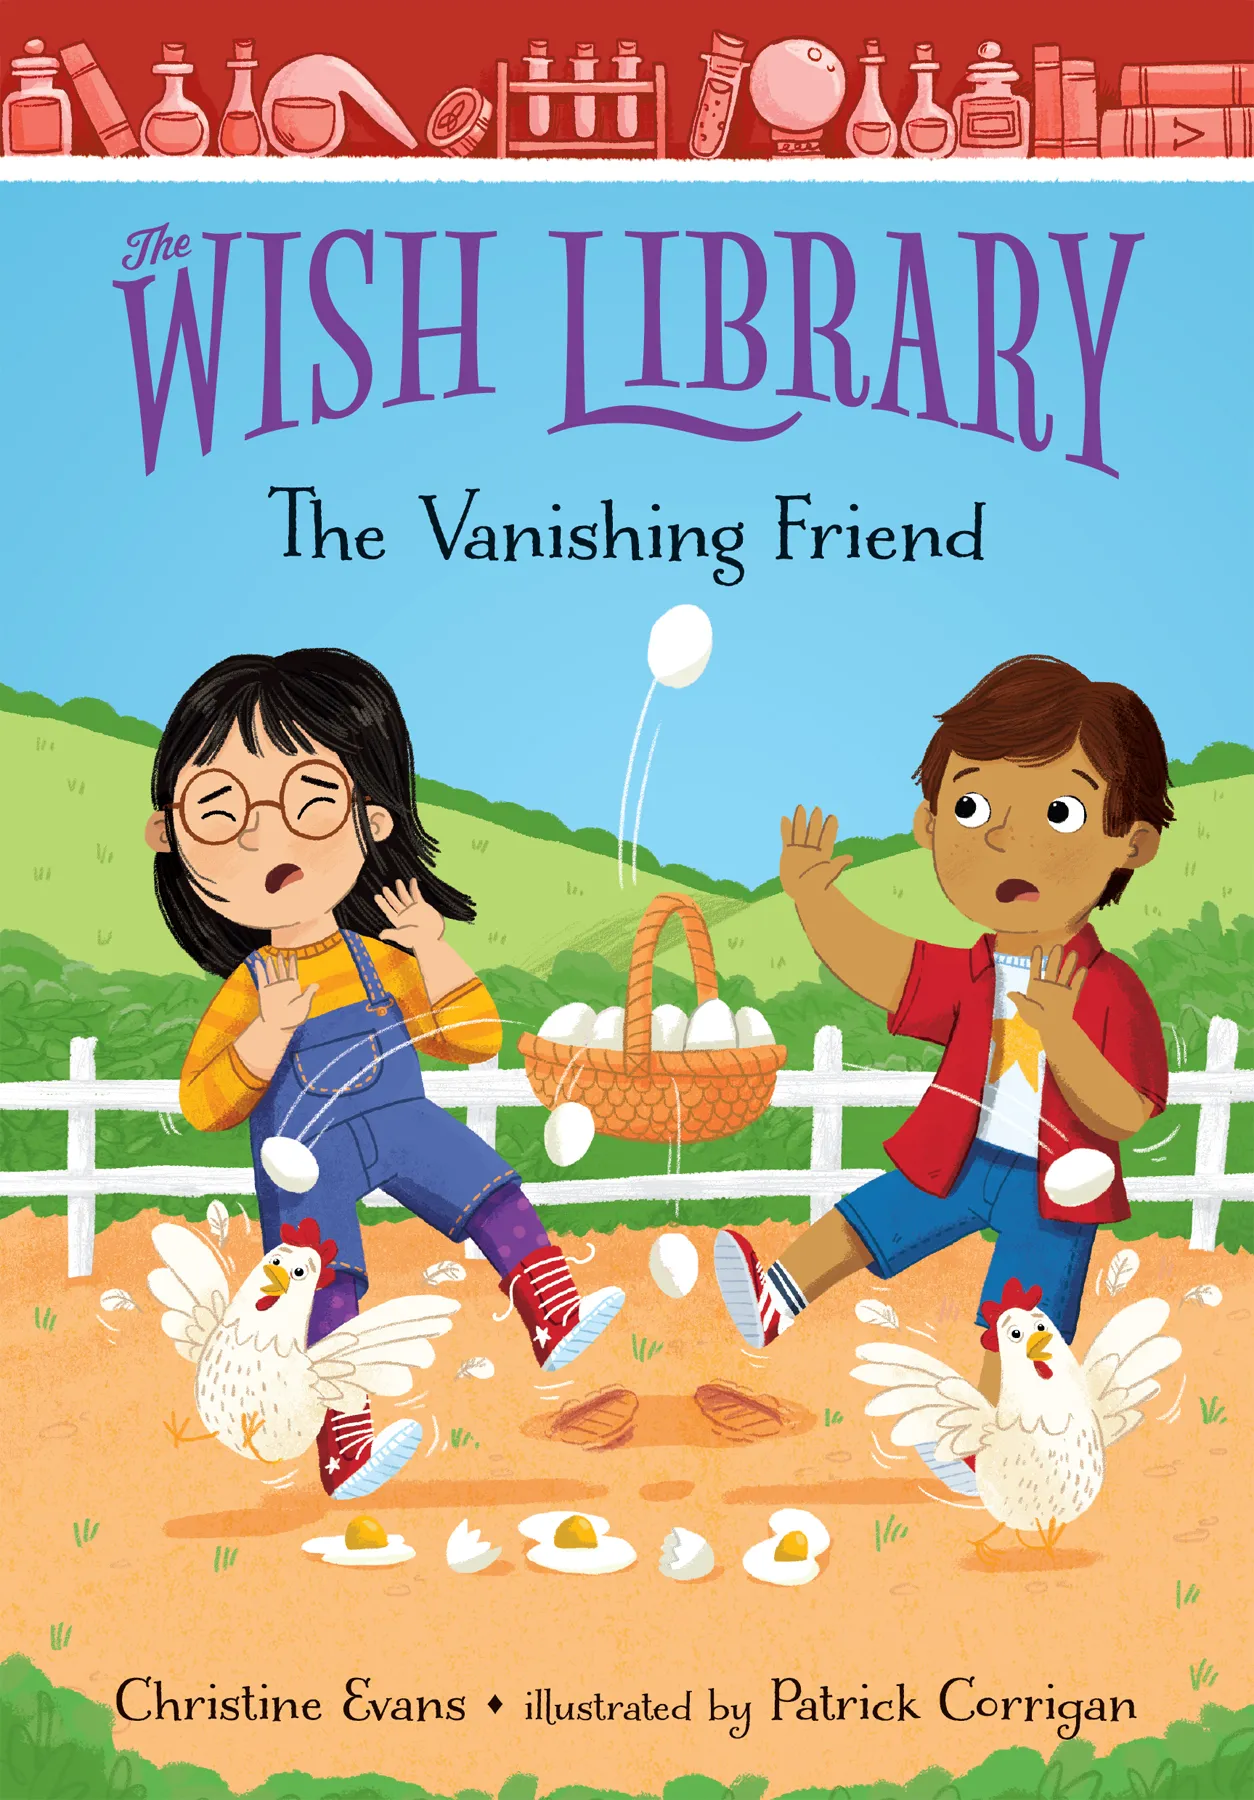 The Vanishing Friend (The Wish Library #5)